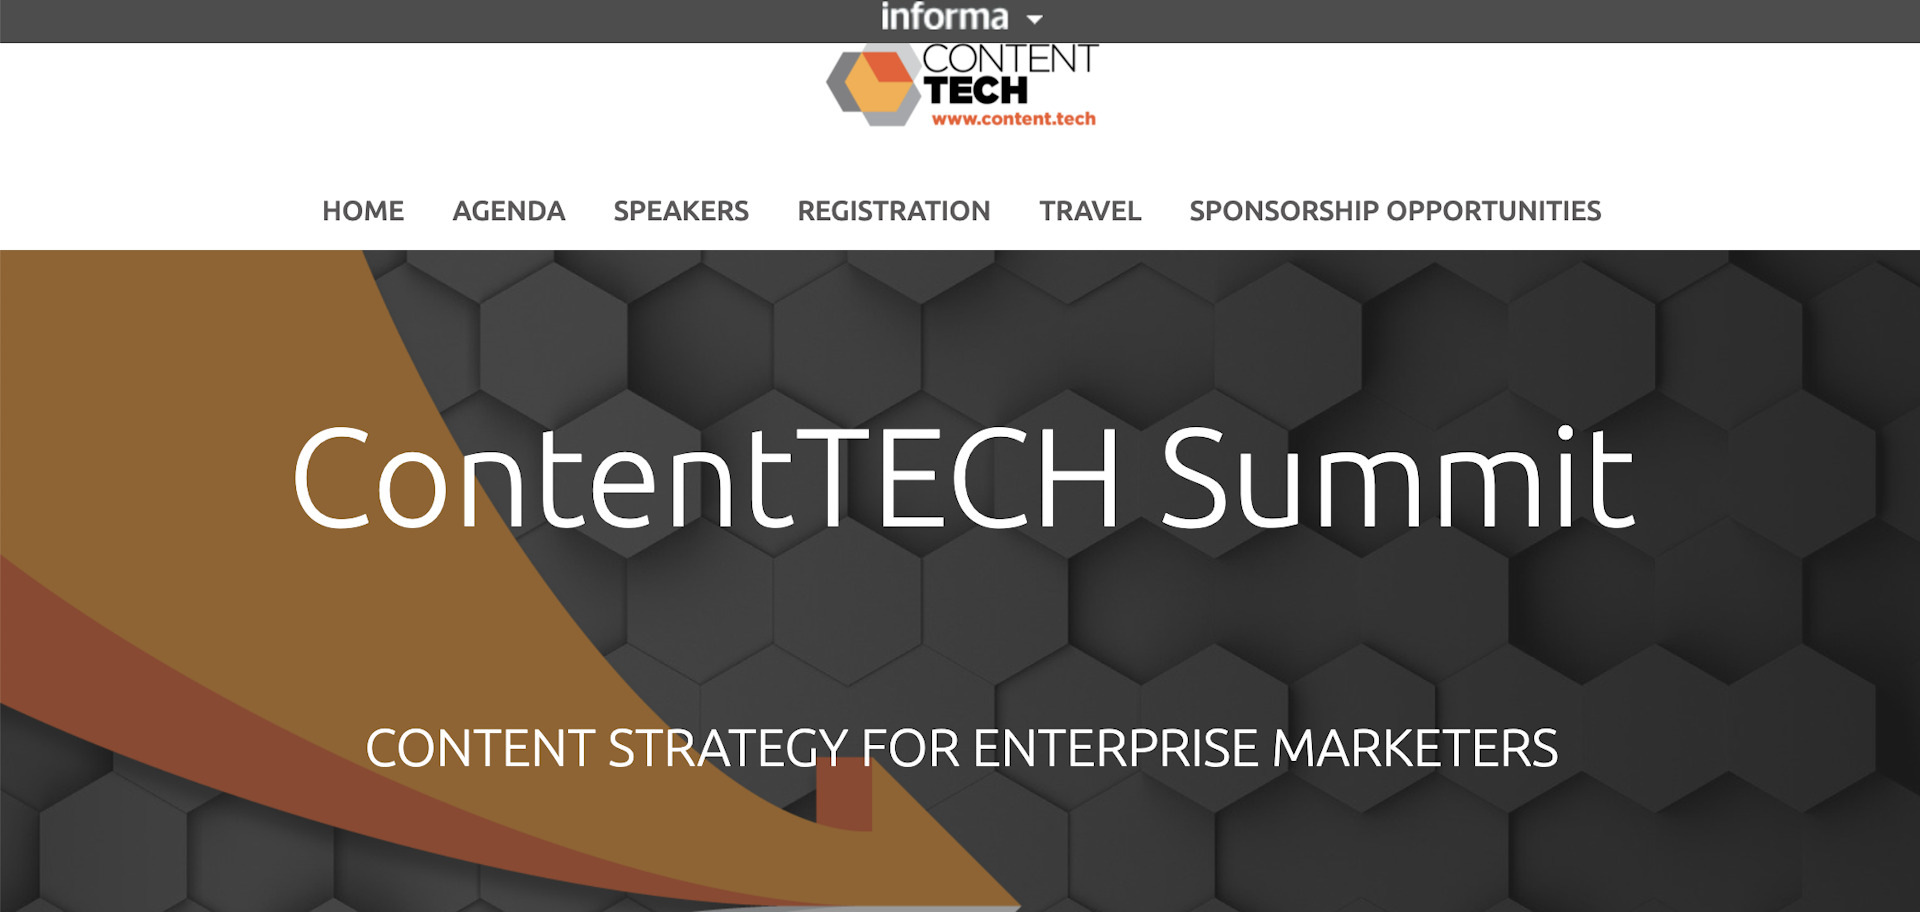 ContentTECH Summit registration page